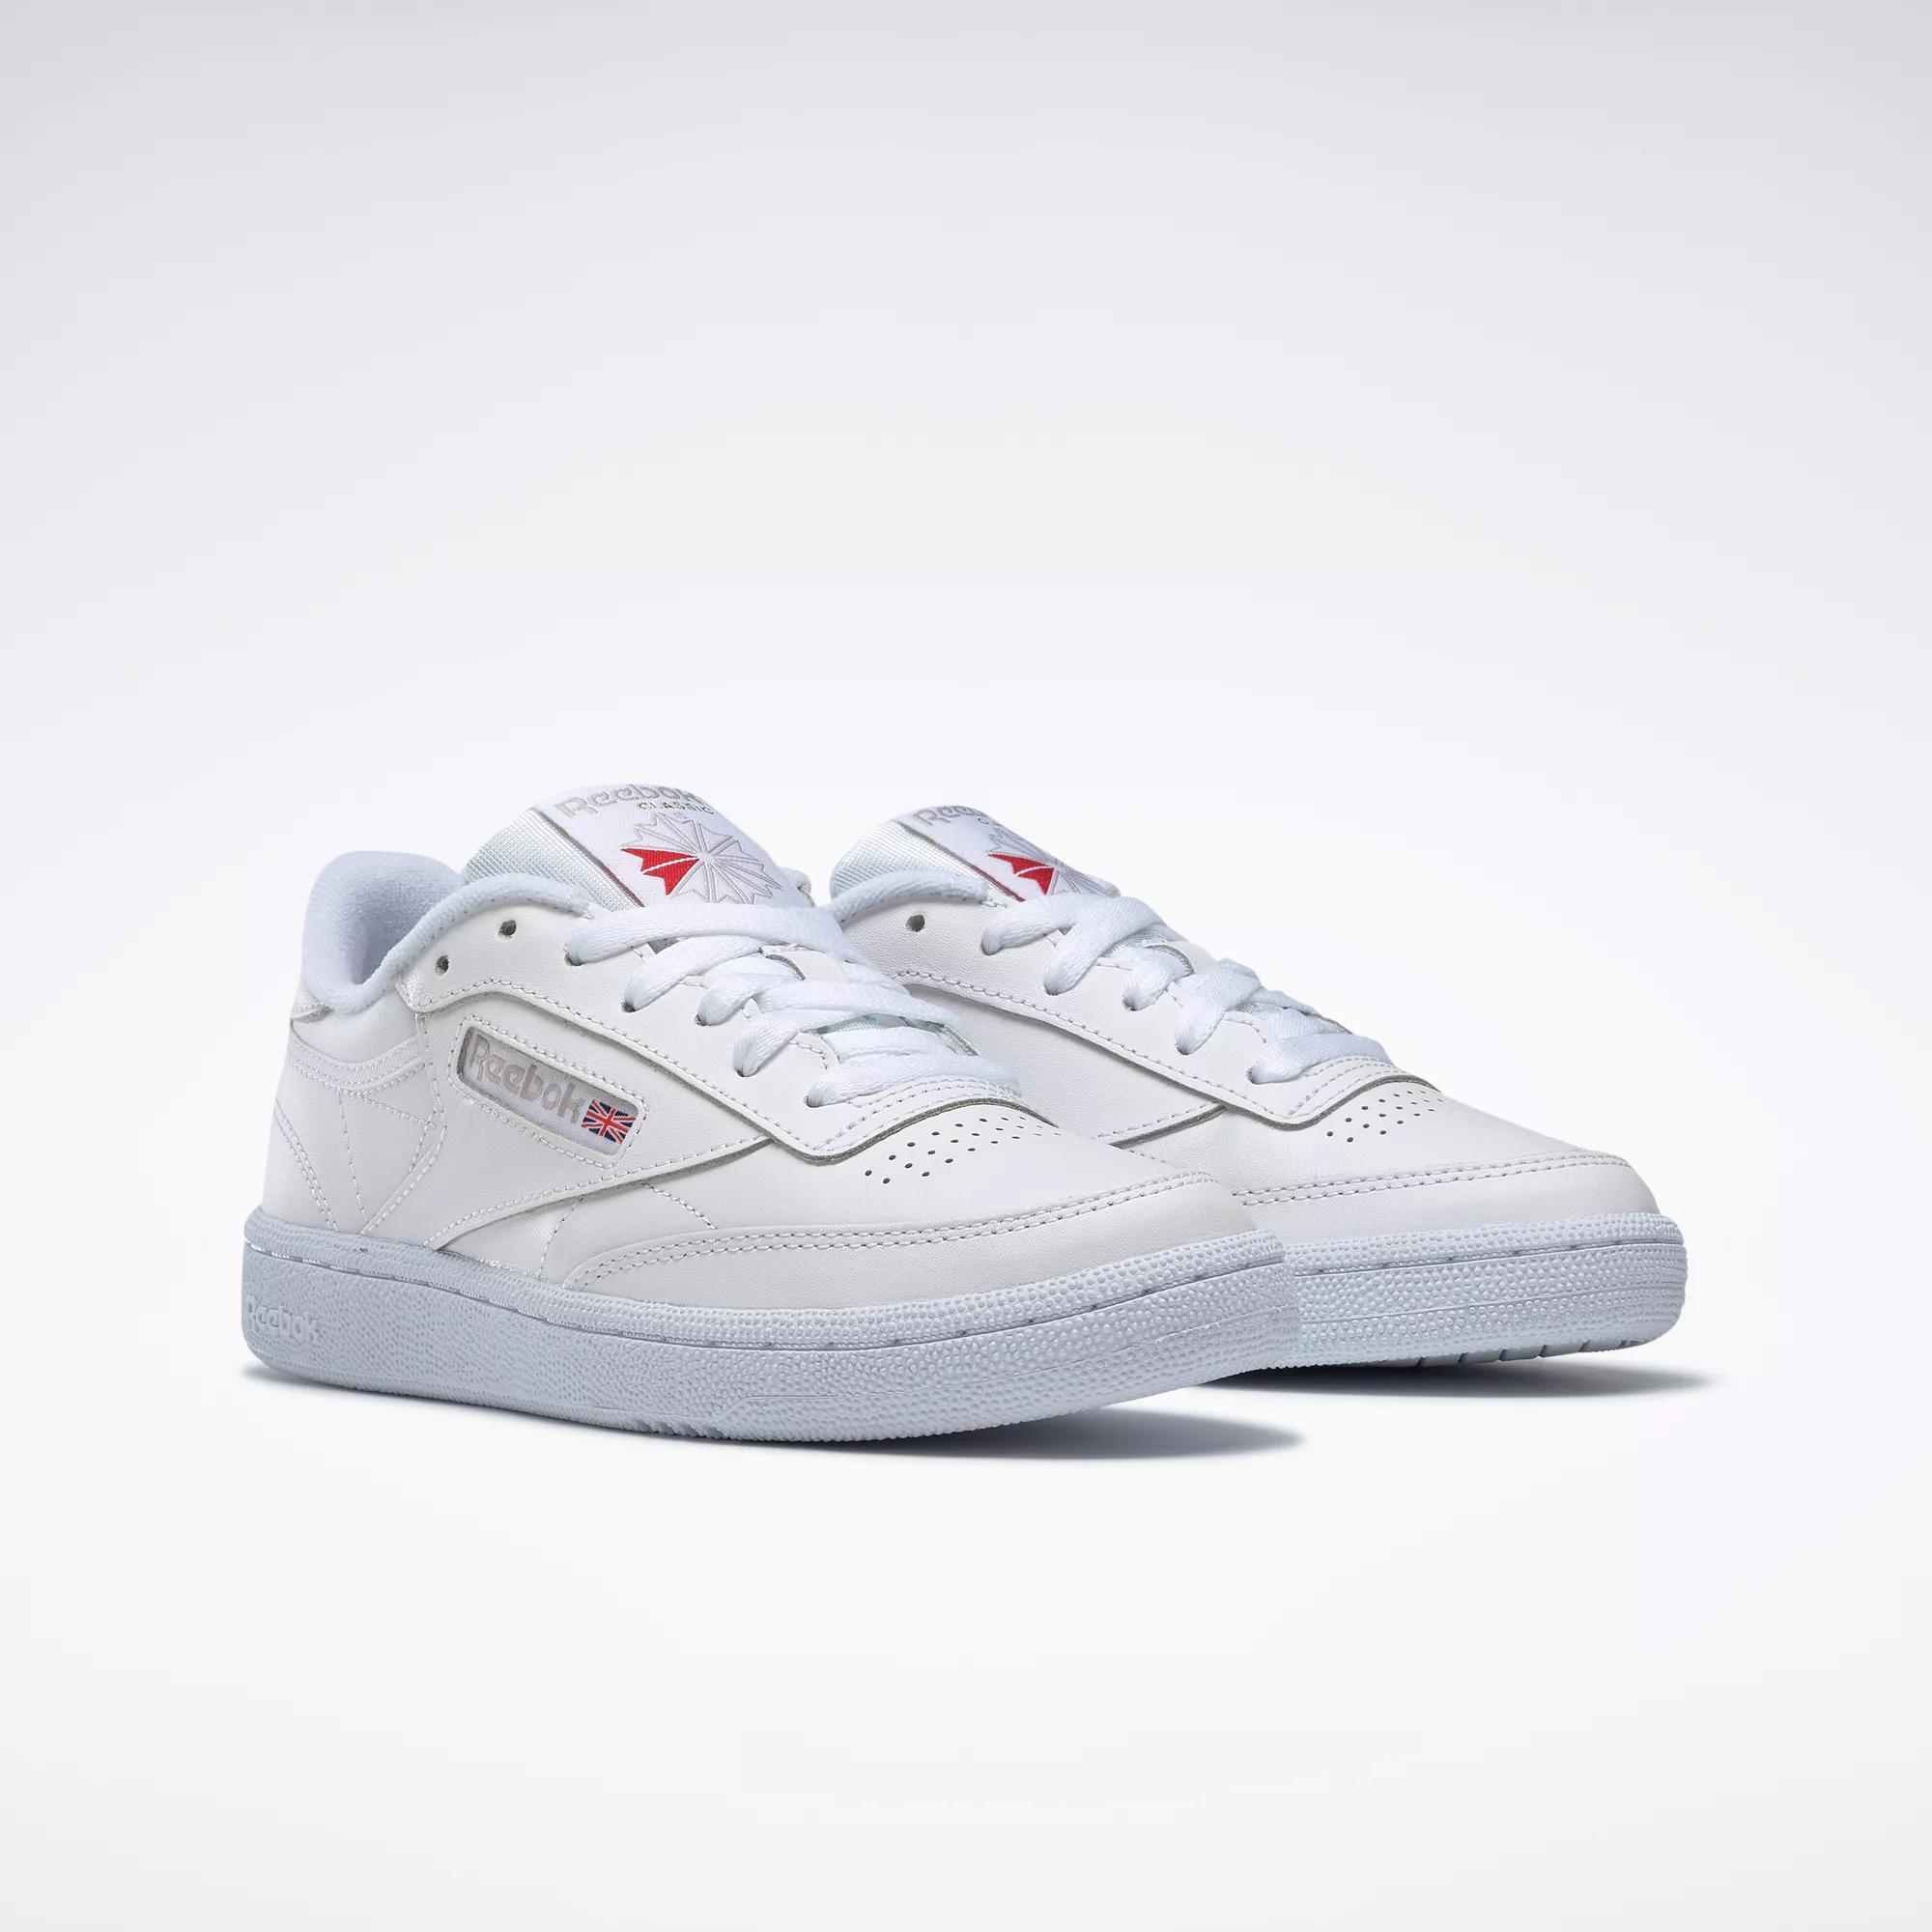 Club C 85 Shoes - White / Light Grey | Reebok